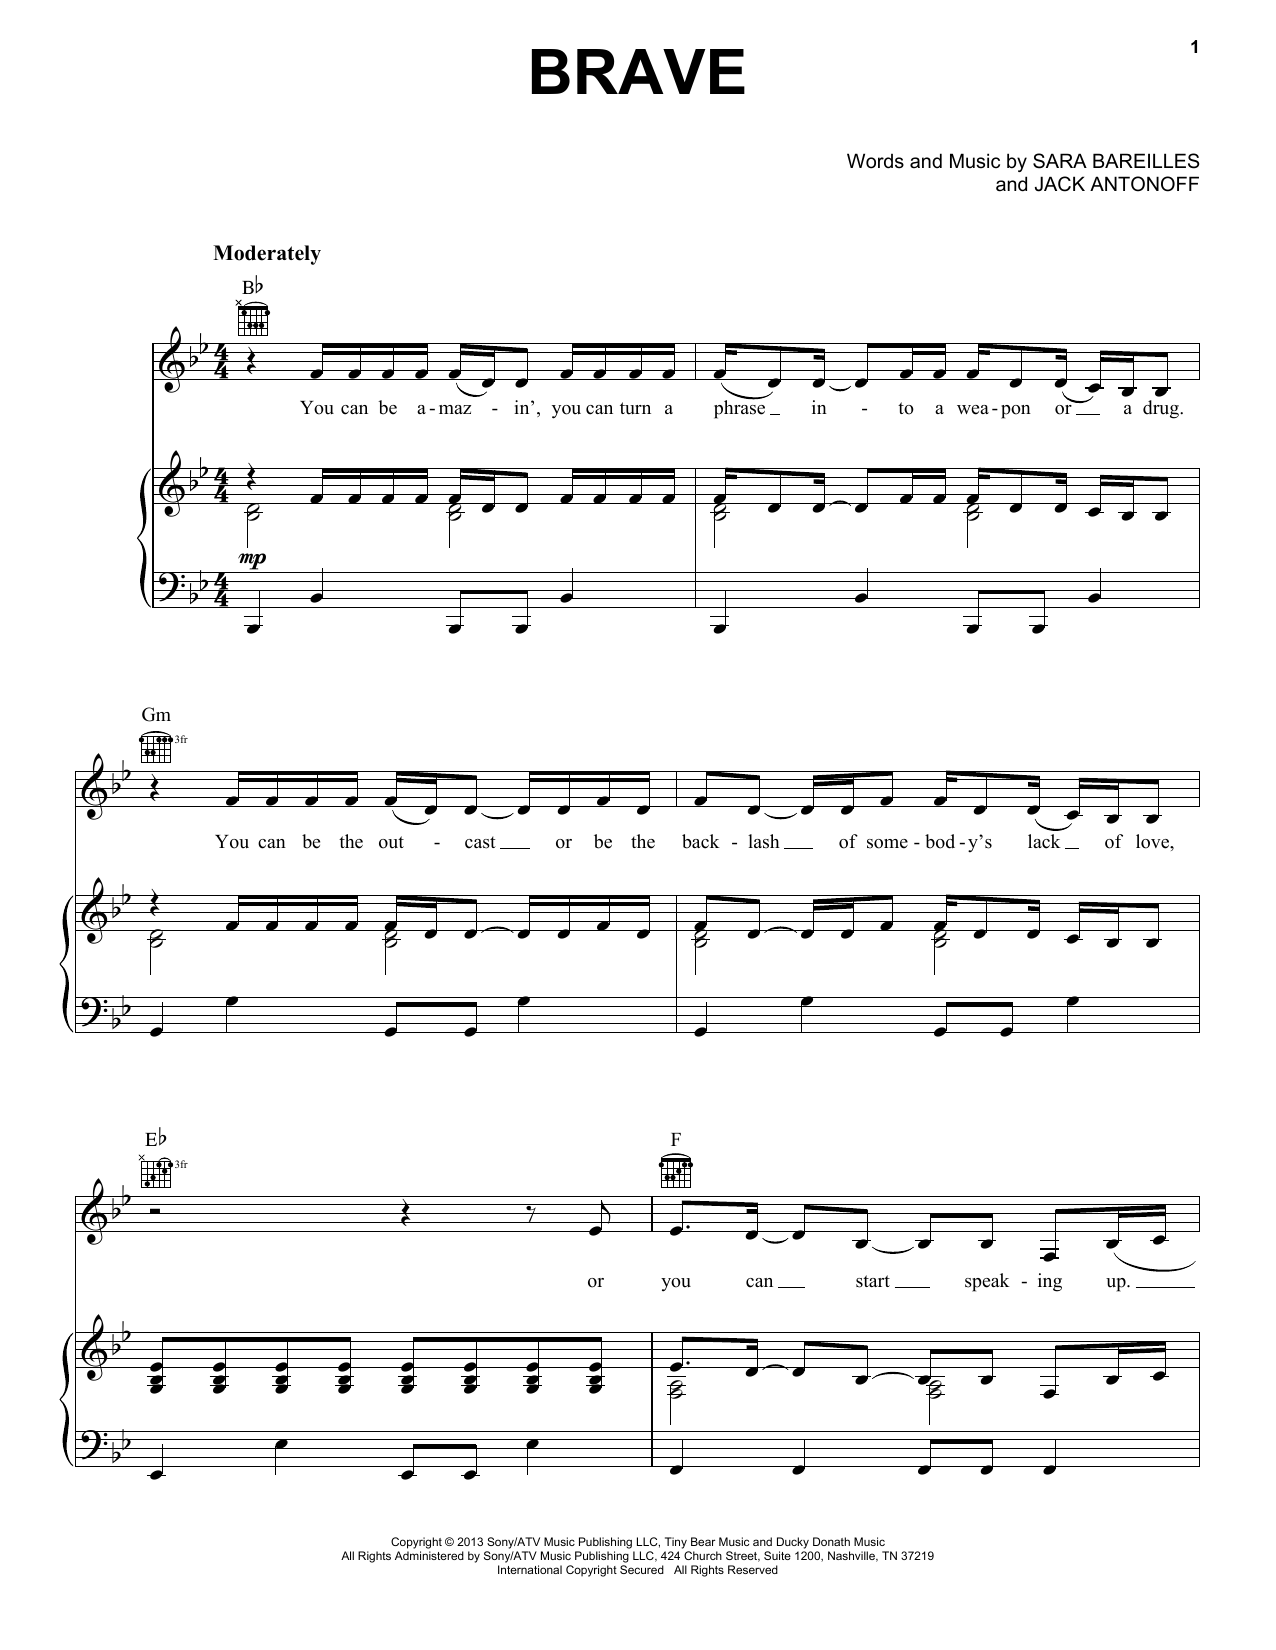 Sara Bareilles Brave Sheet Music Notes & Chords for Guitar Tab - Download or Print PDF